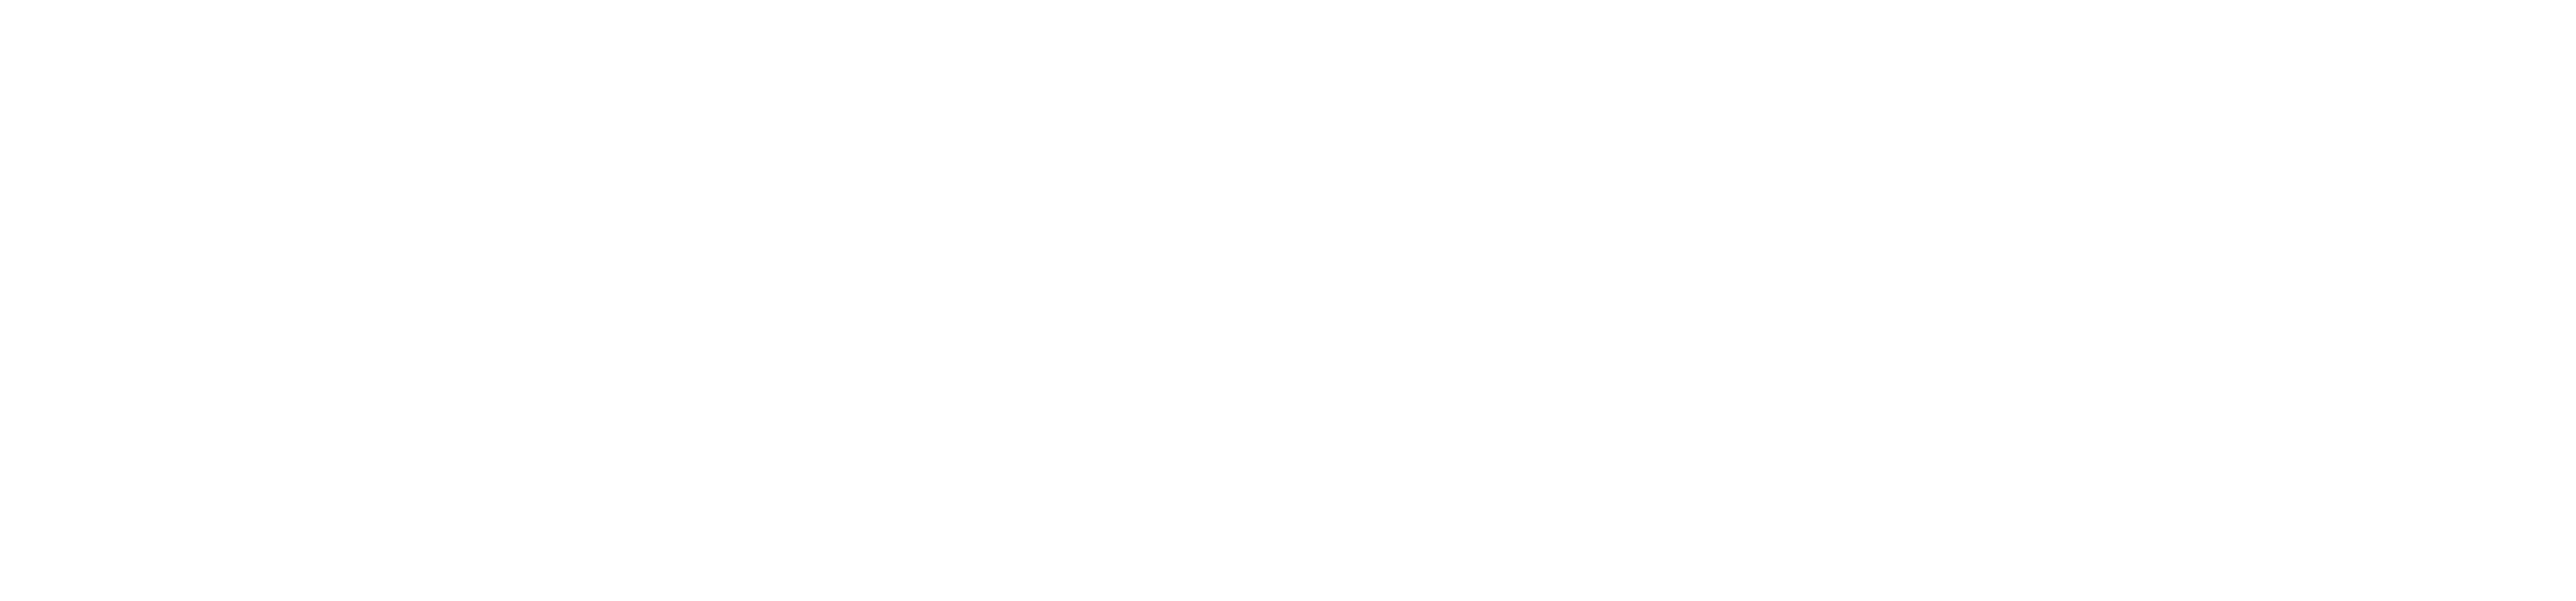 Skyline Builders Group